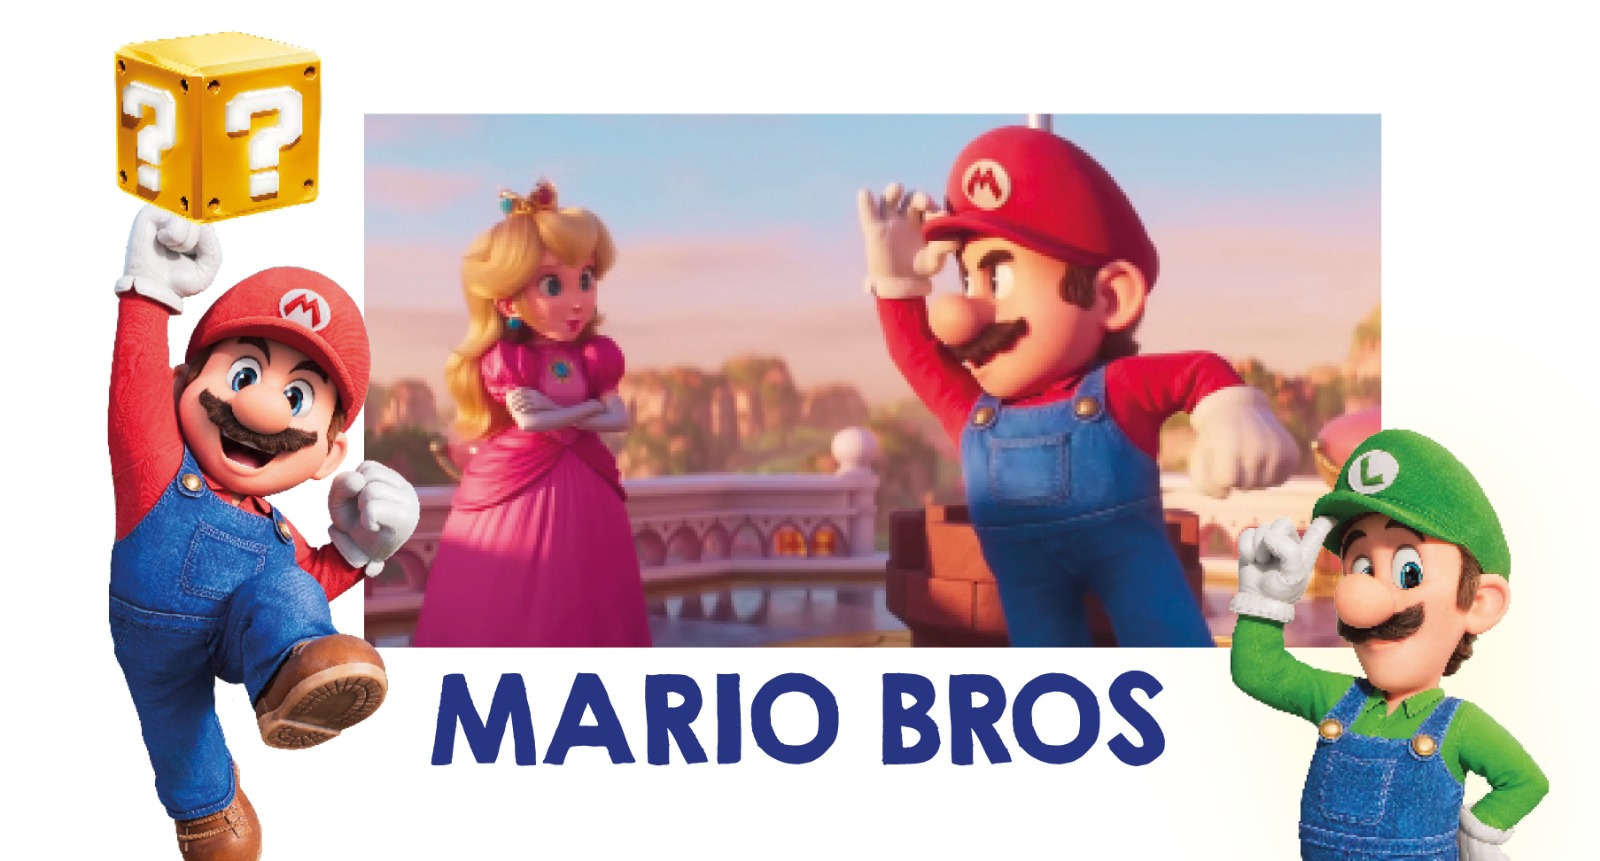 Mario Bros reestreia nos cinemas